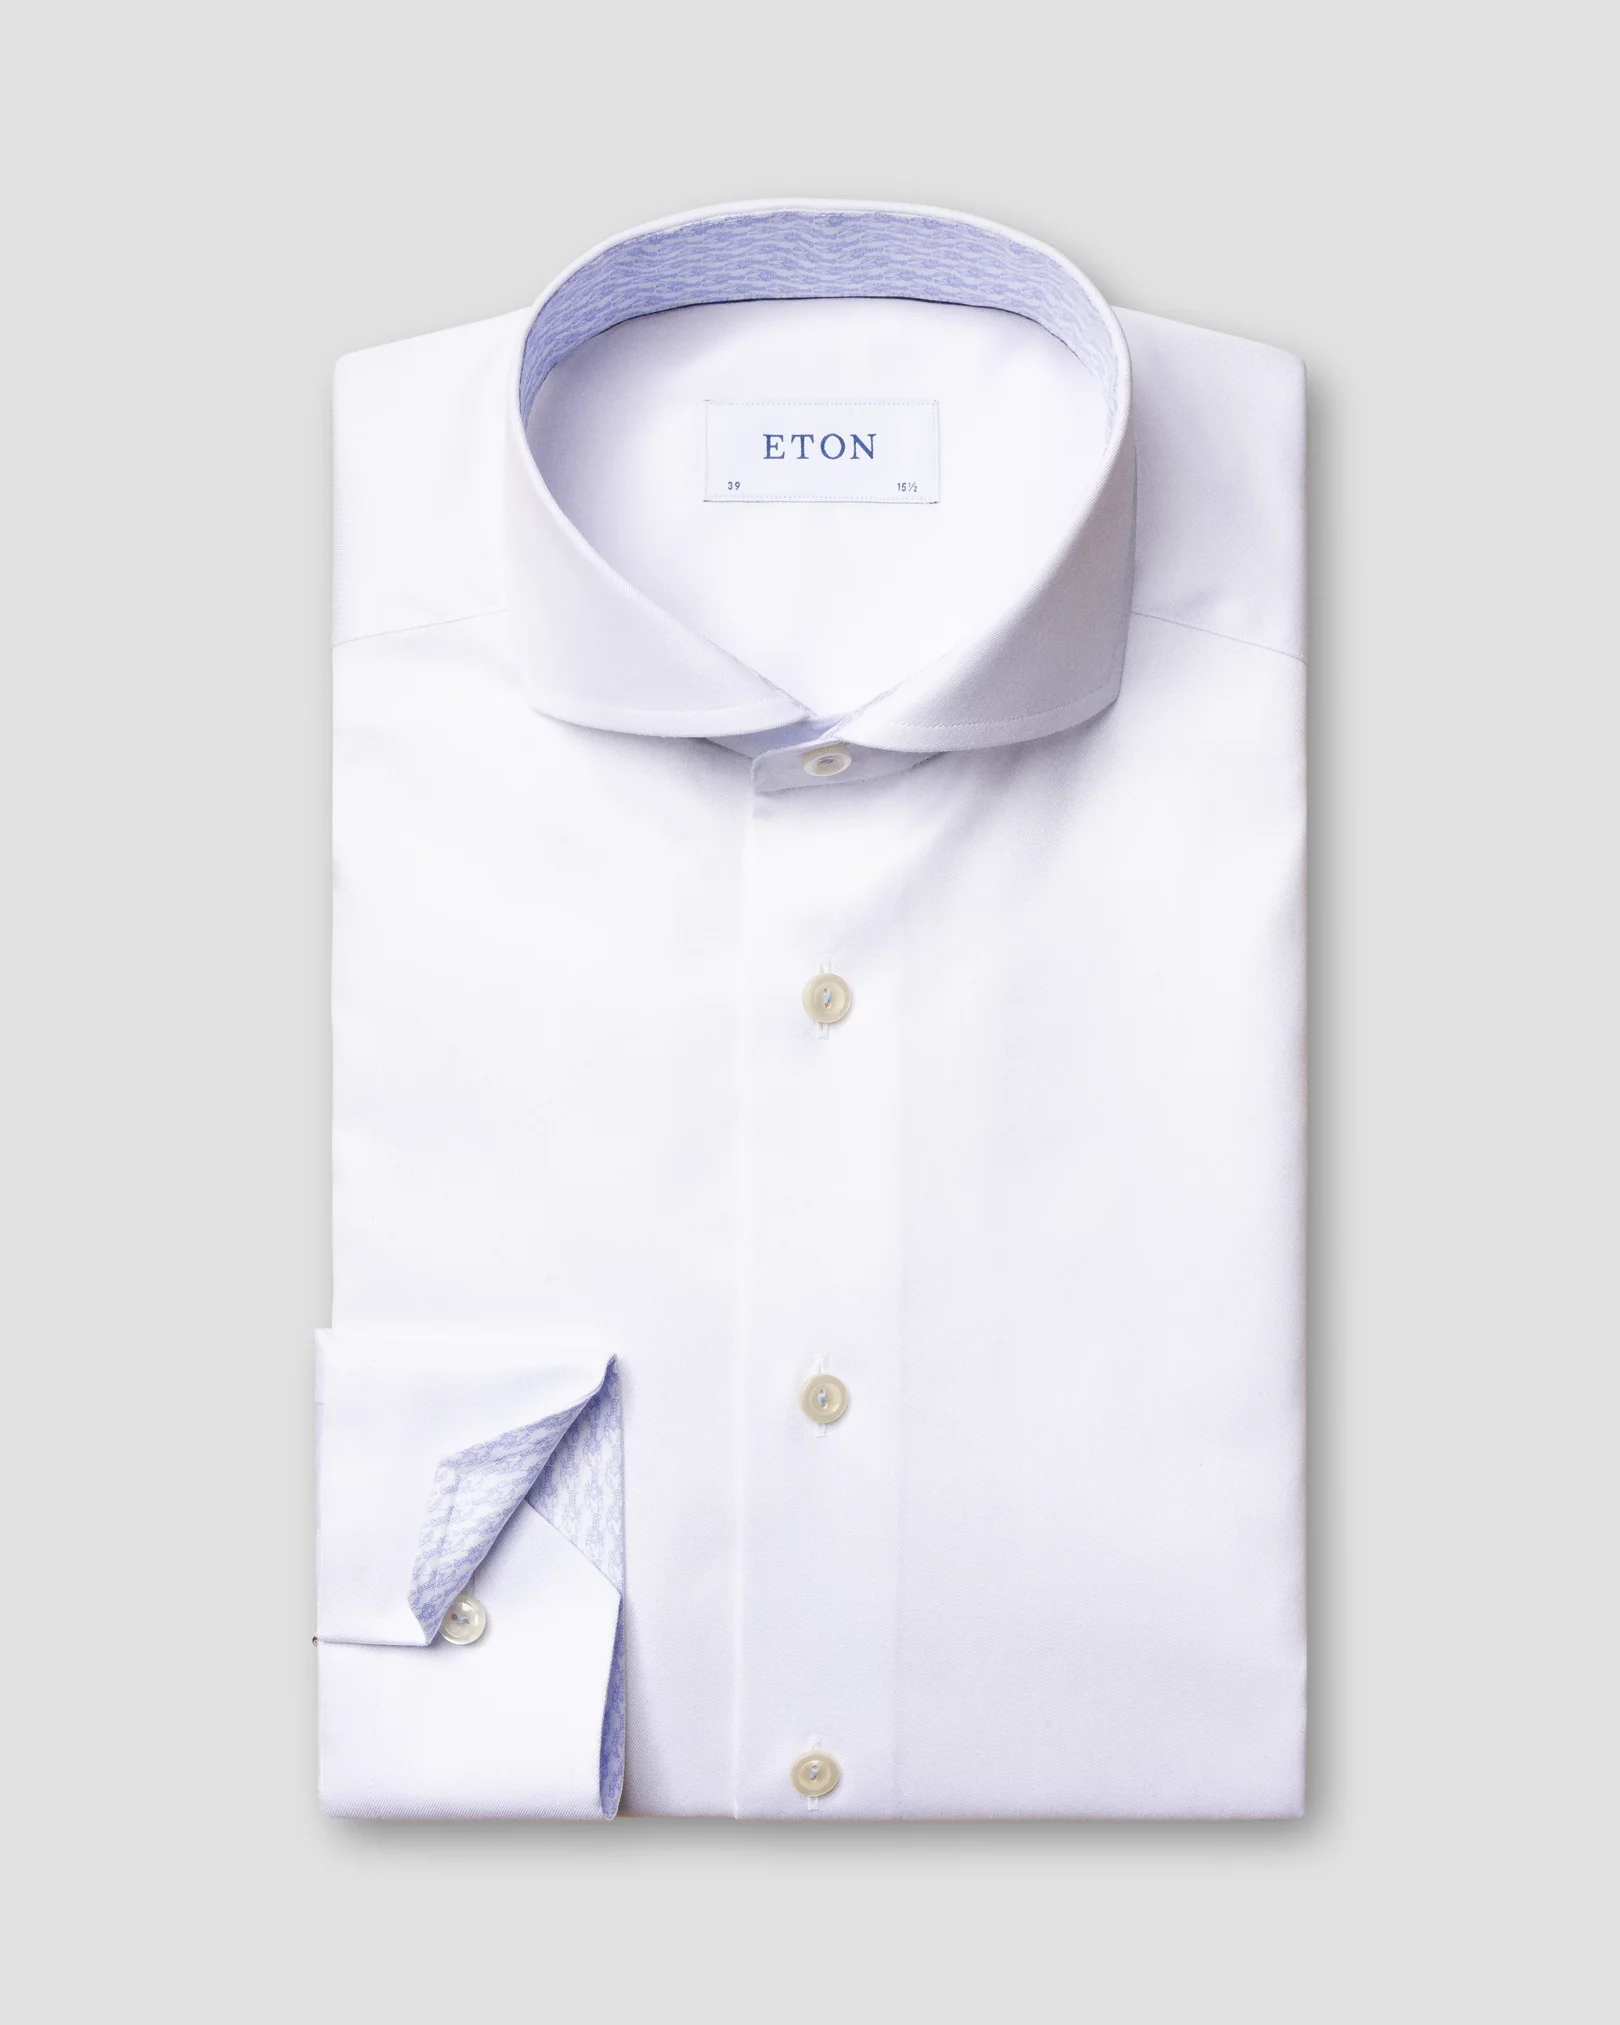 Eton - white signature twill shirt printed details extreme cut away